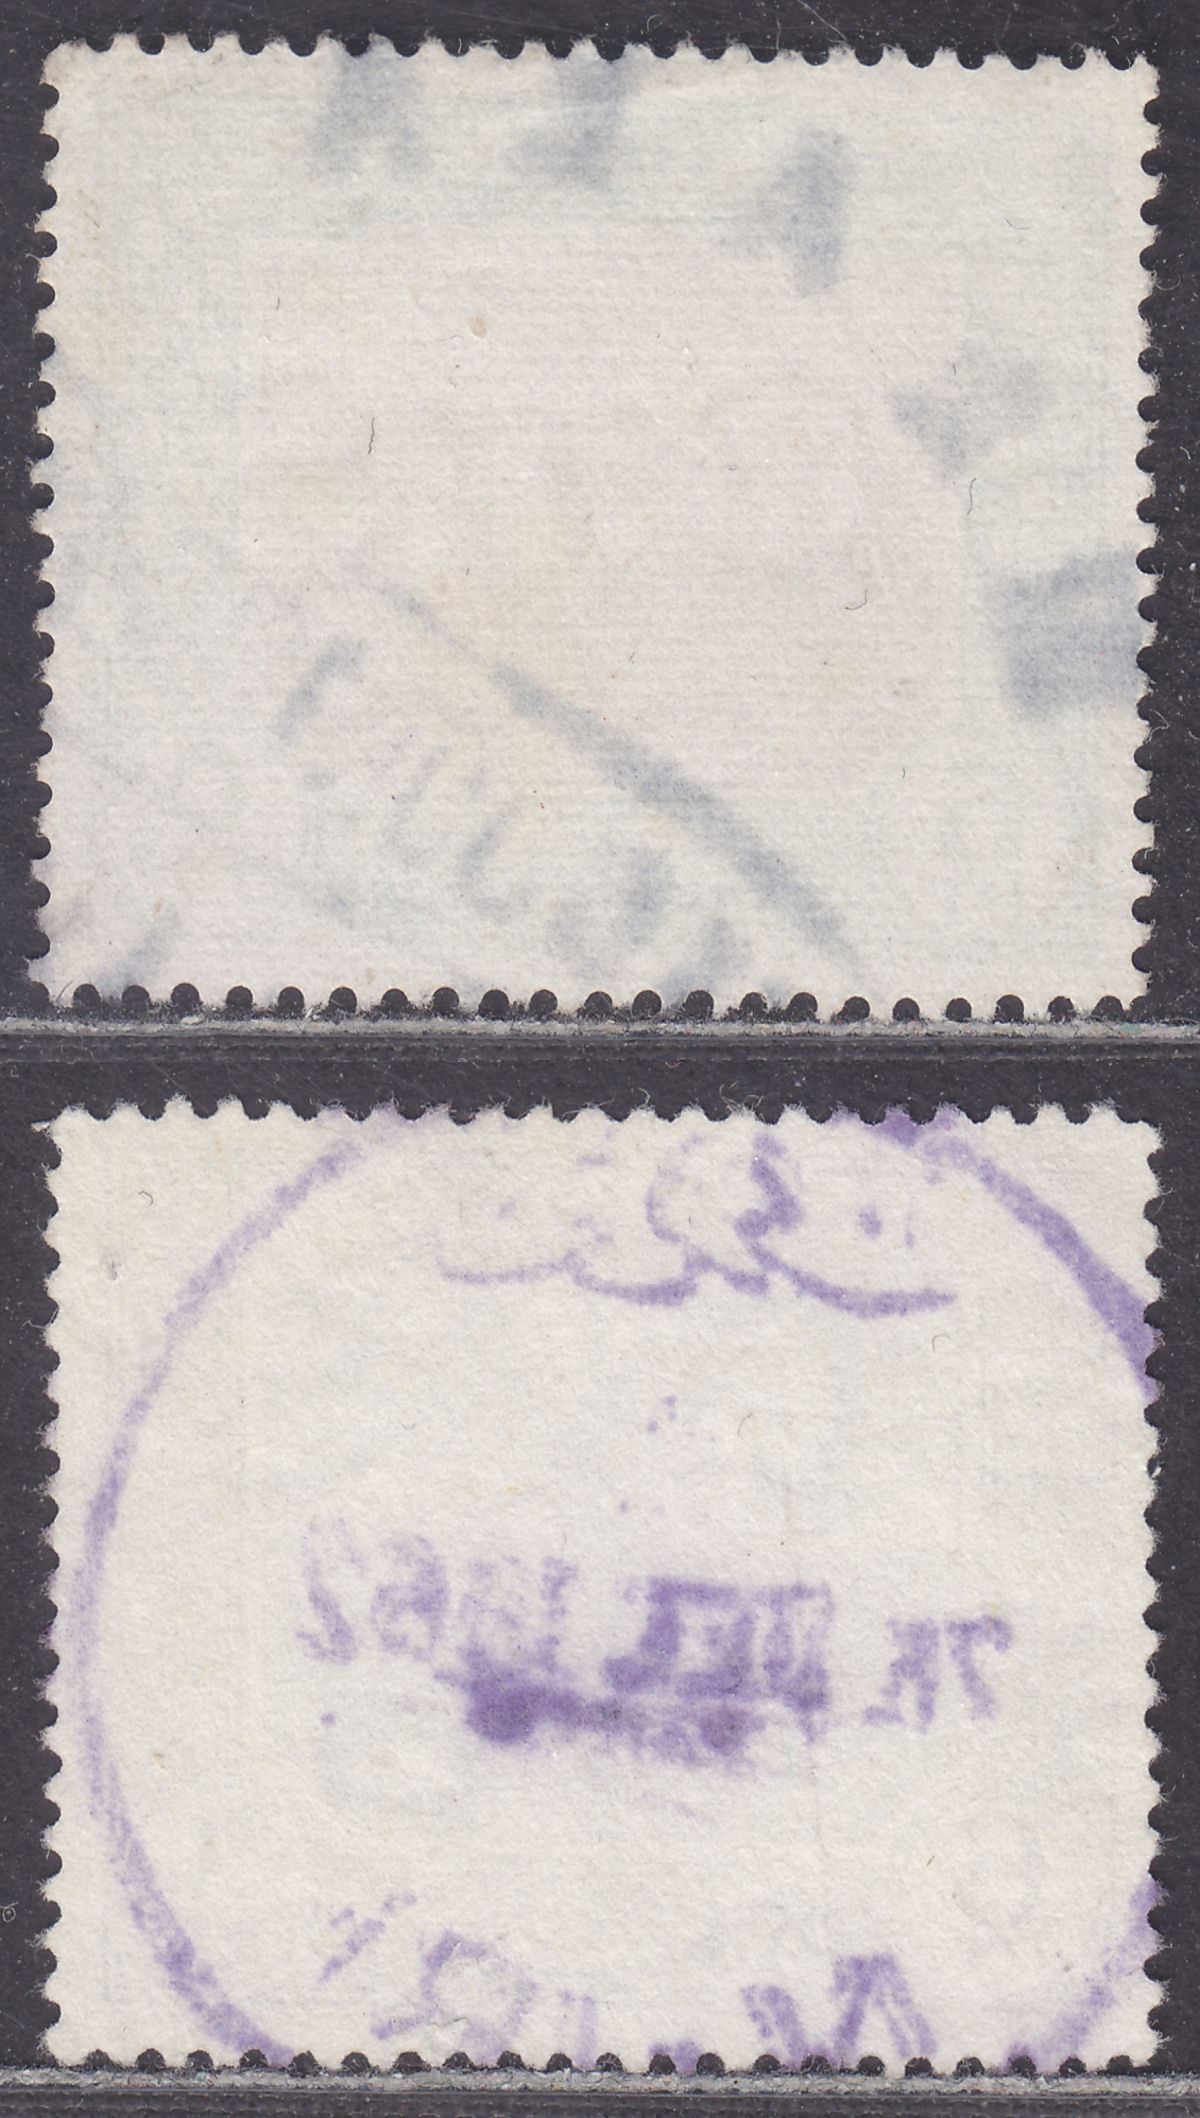 Sudan 1951 KGVI Pictorials 5p, 6p Used with NZARA, NURI Postmarks